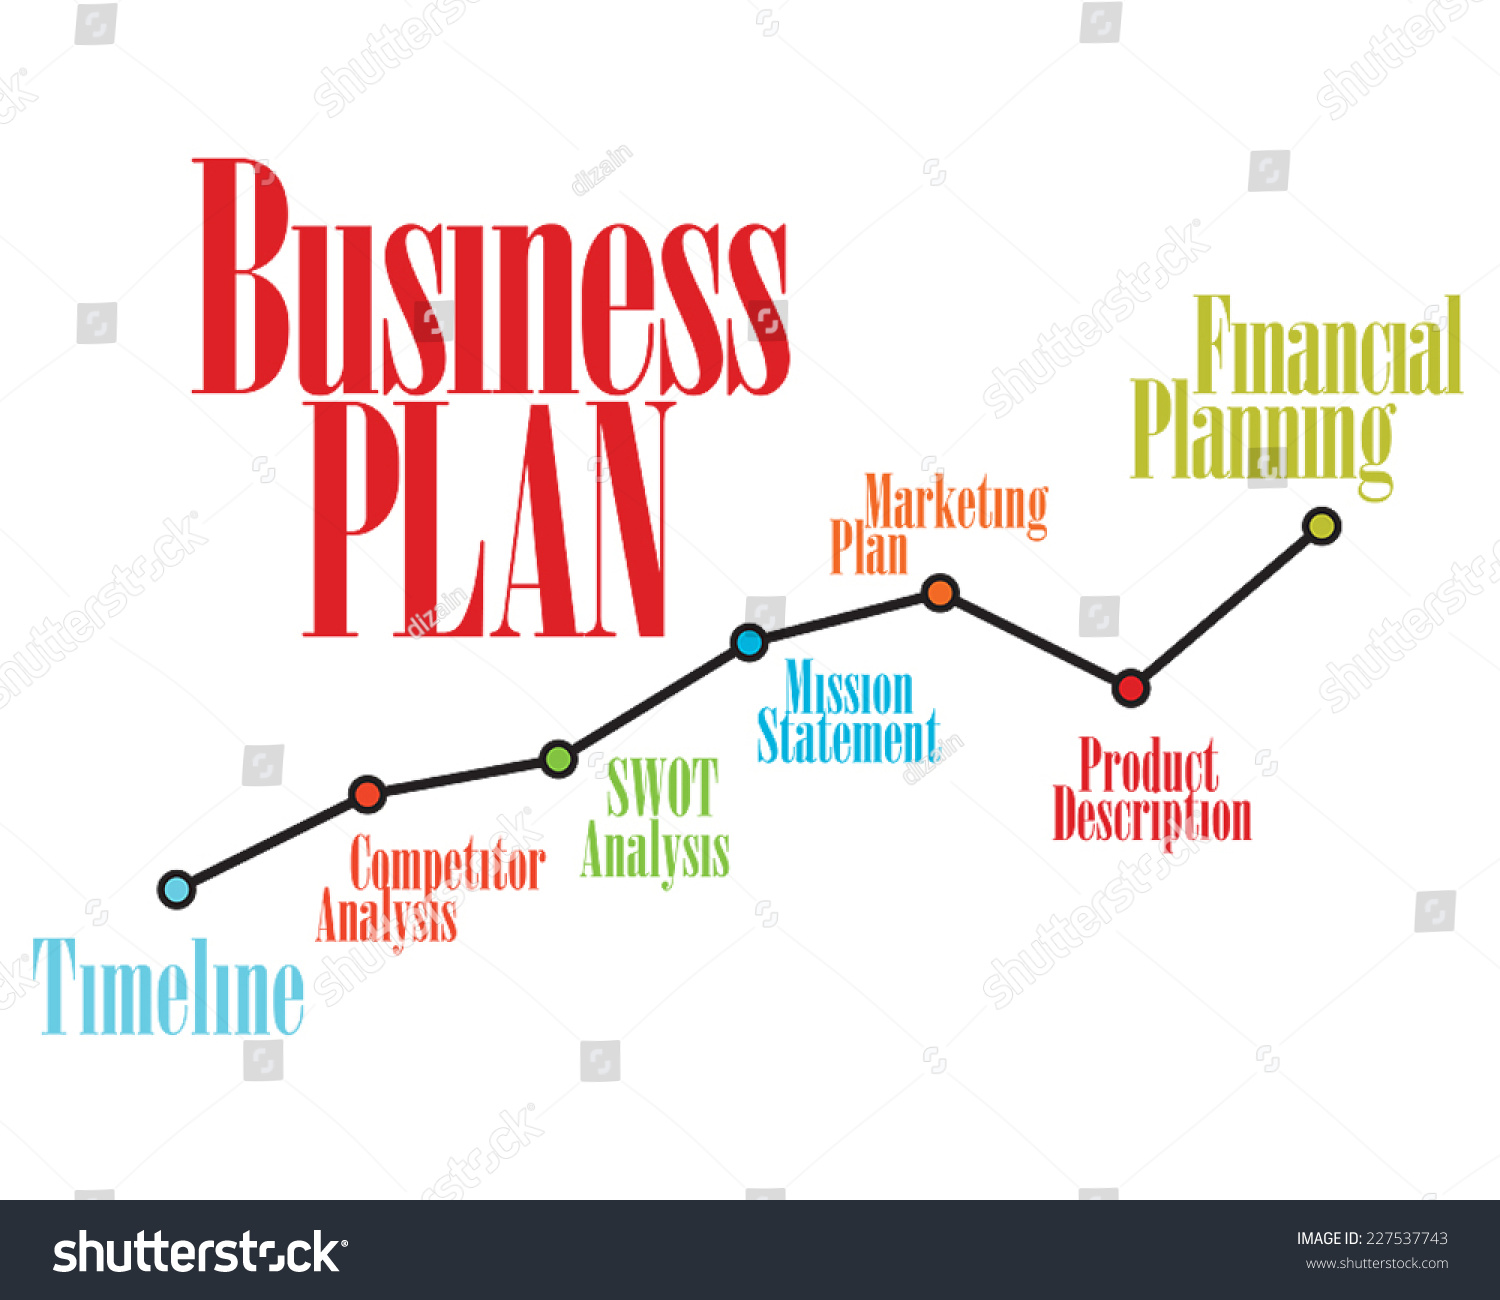 Business plan financial planner